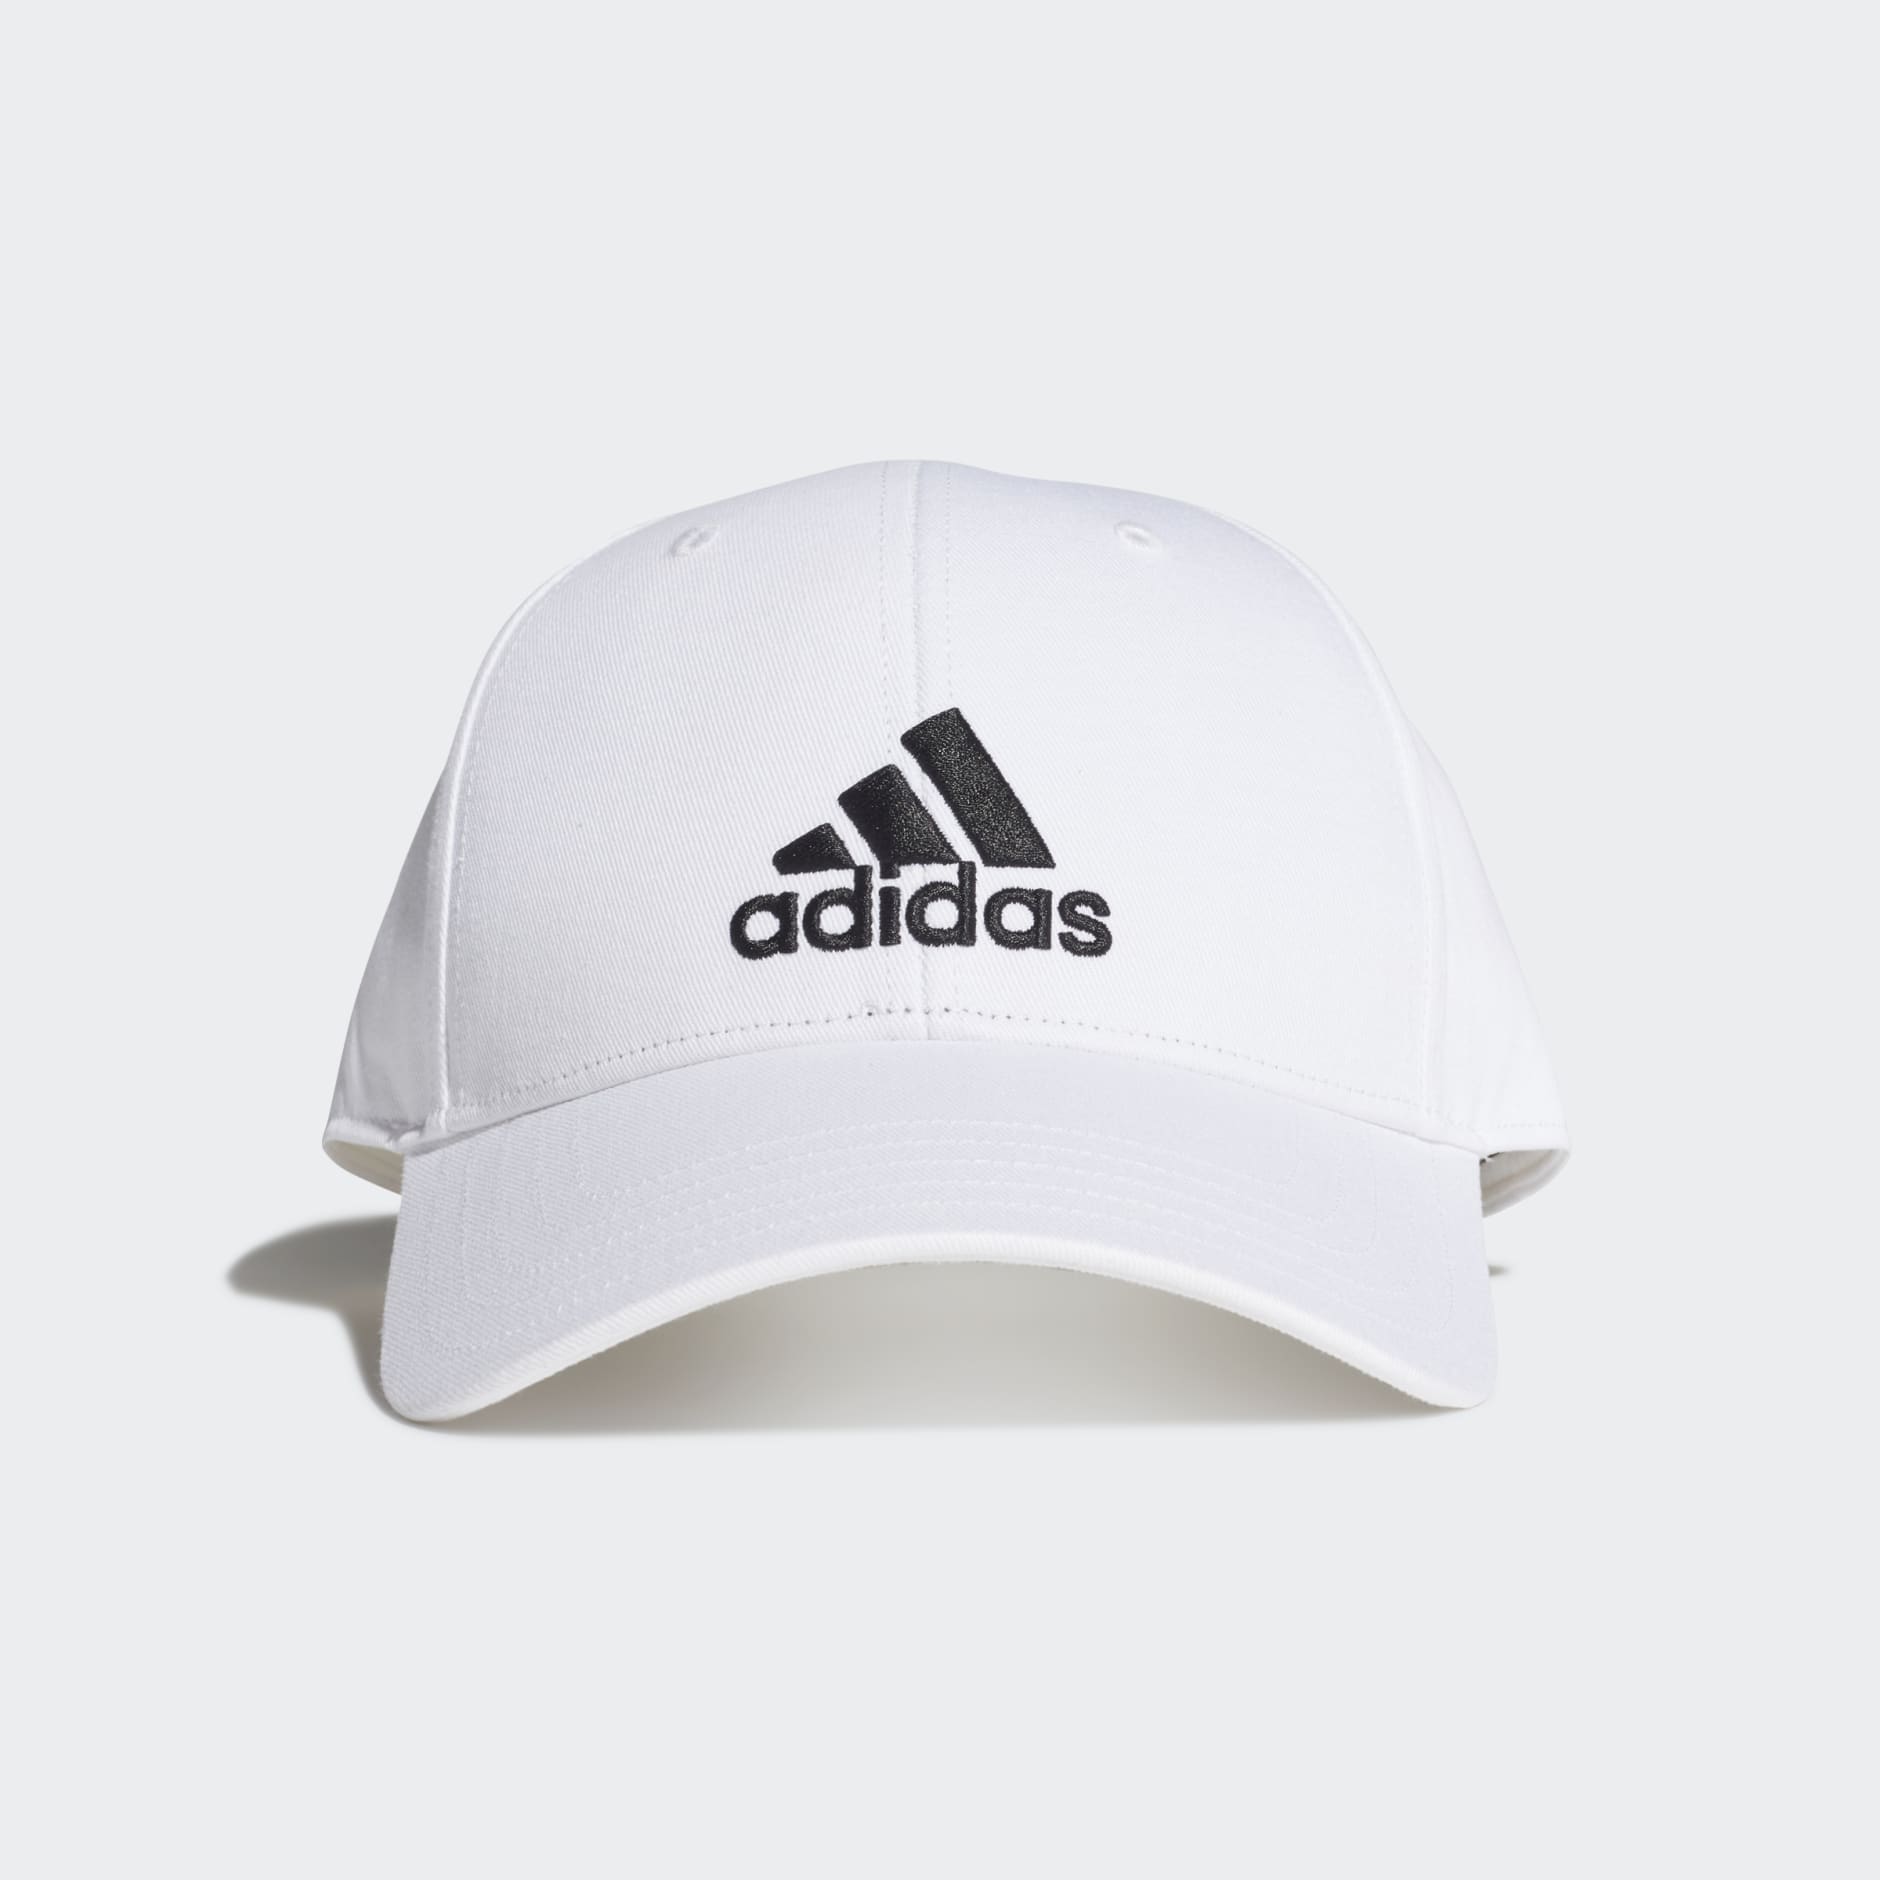 adidas COTTON BASEBALL CAP - White